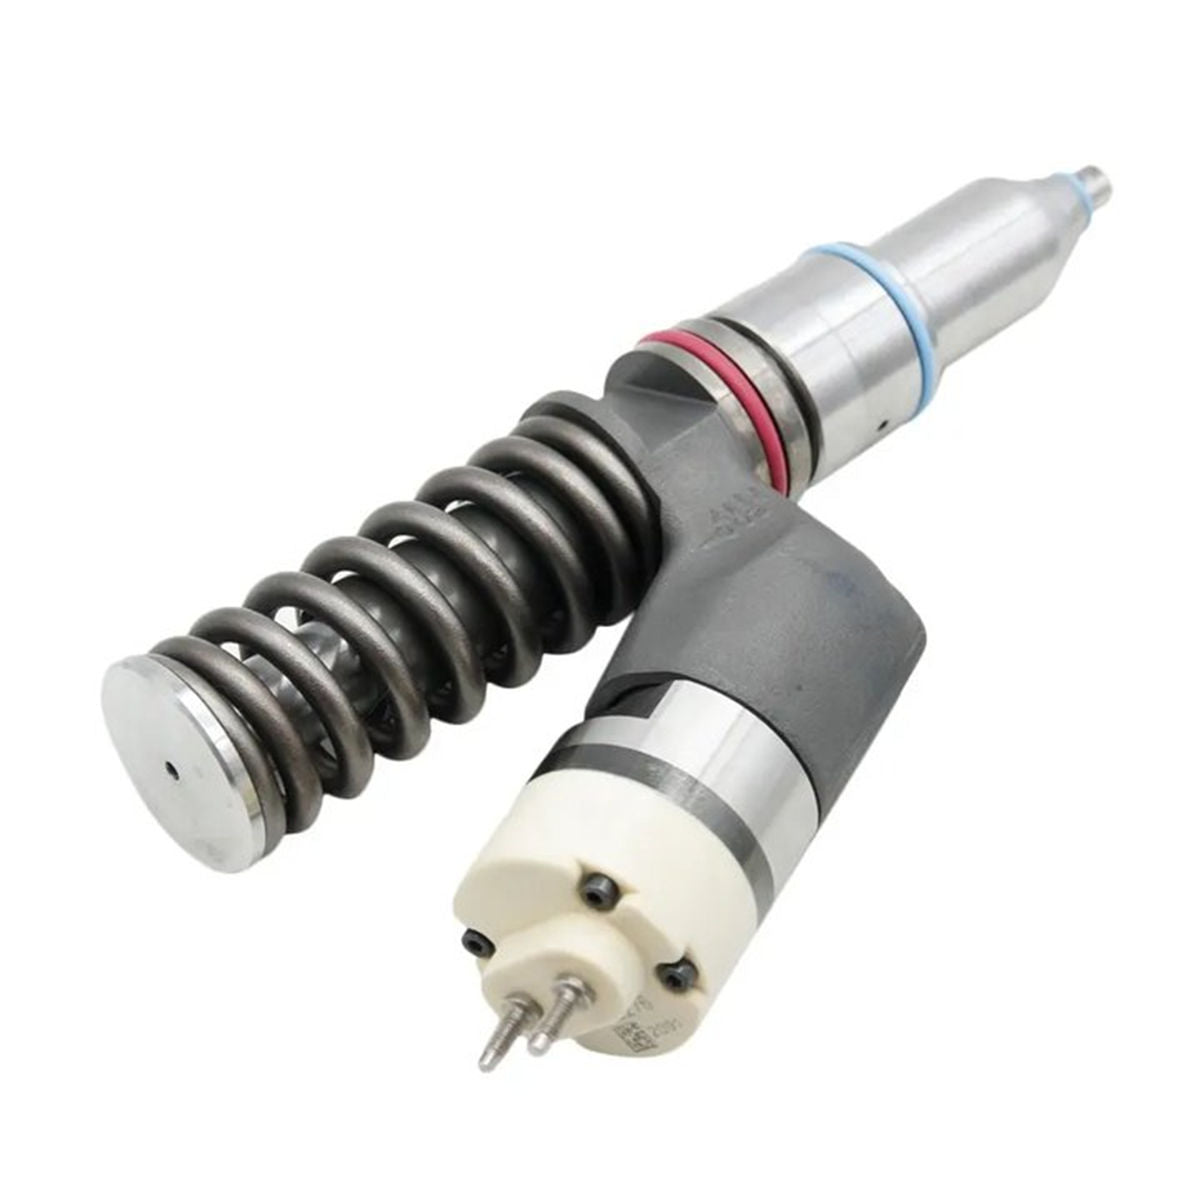 103-4562 0R-4300 Fuel Injector for Caterpillar 3406E Diesel Engine - Sinocmp